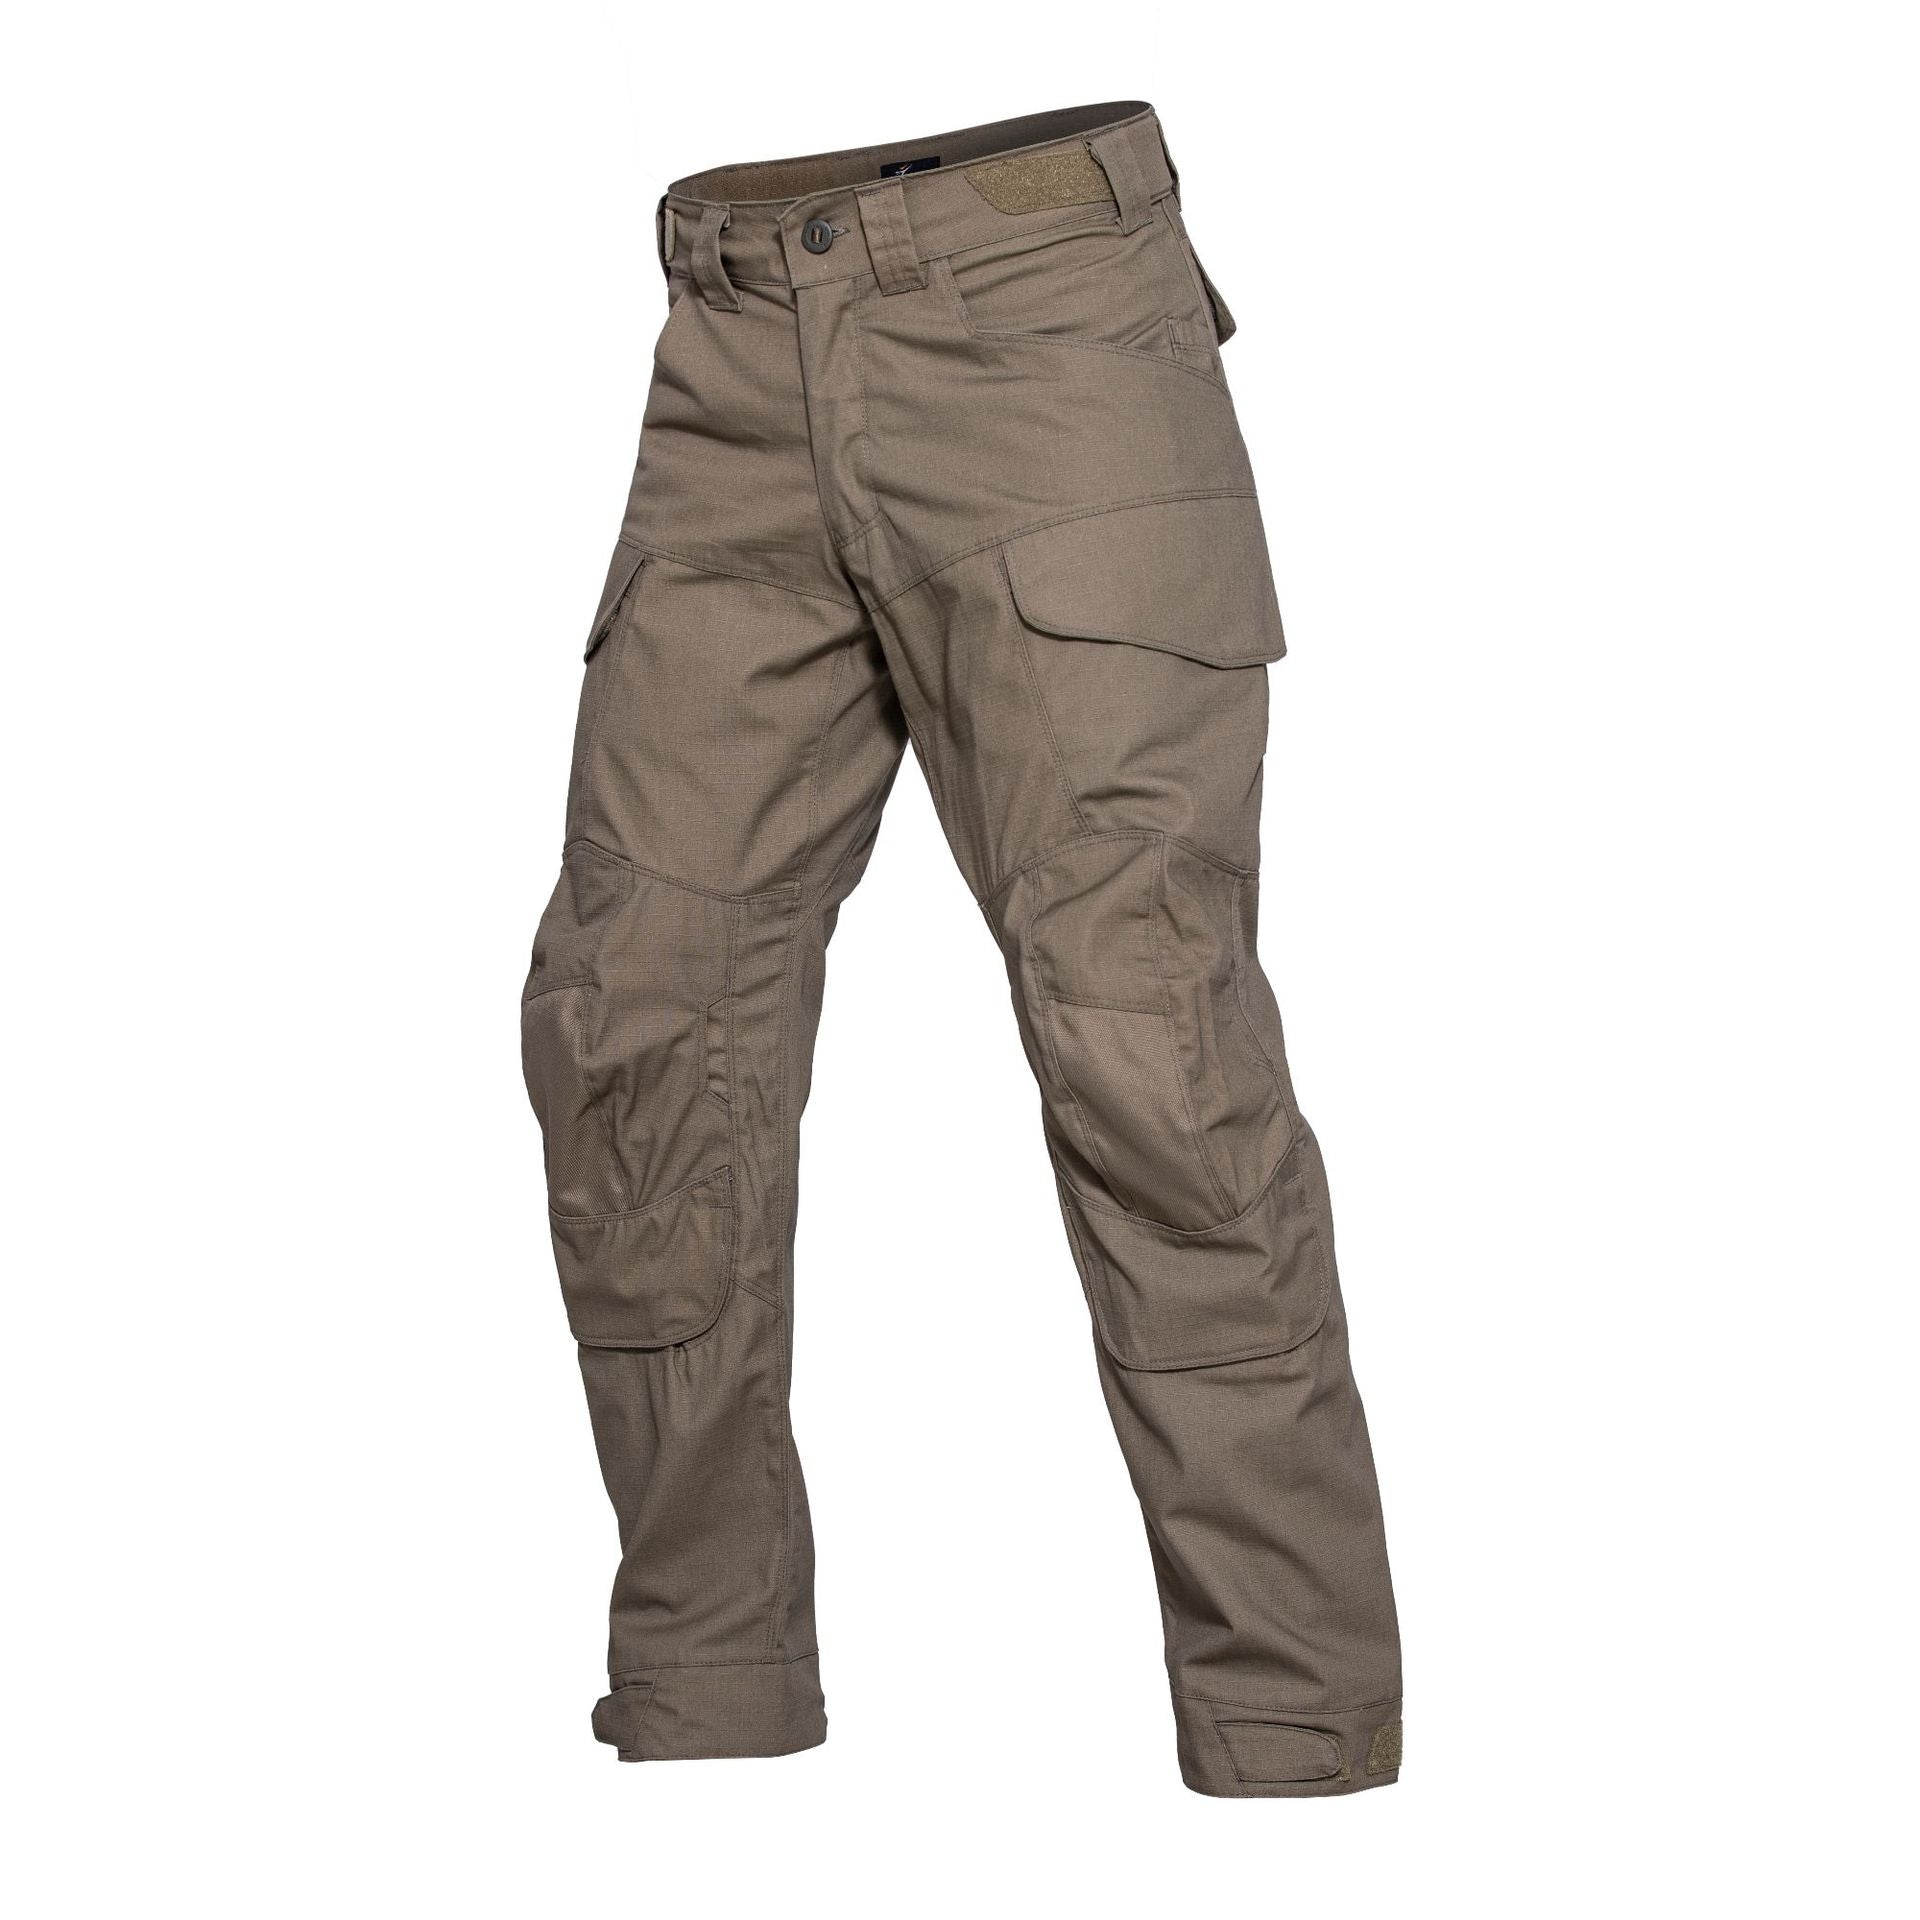 Men's Assault Tactical Pants Rip-stop Work Pants